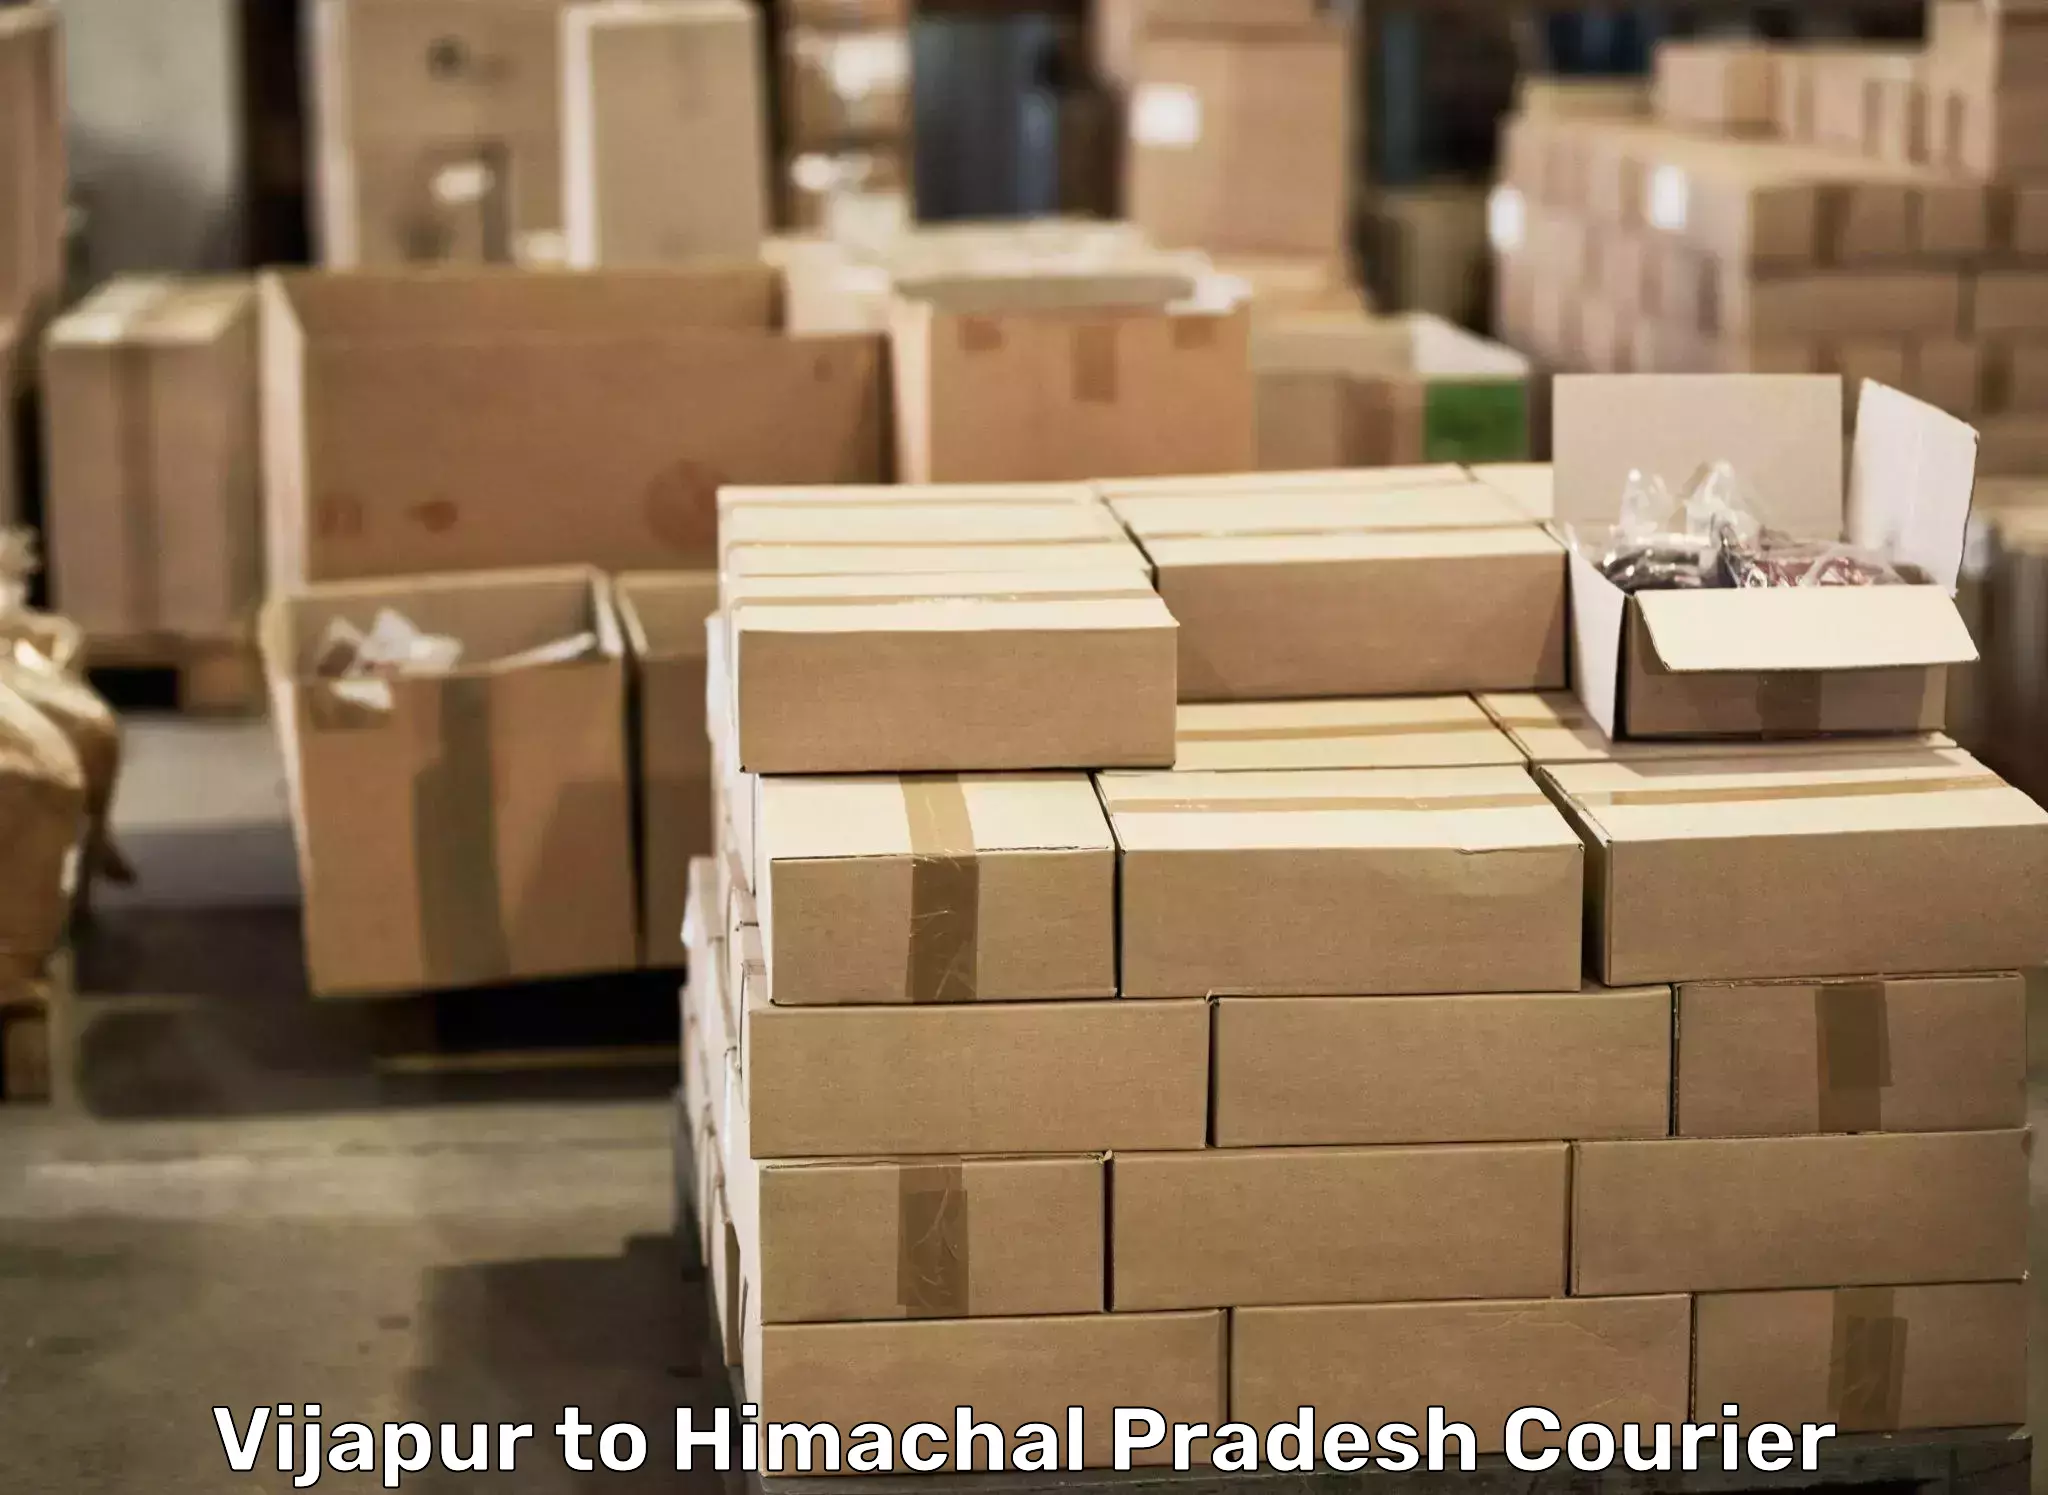 Professional moving company Vijapur to Himachal Pradesh